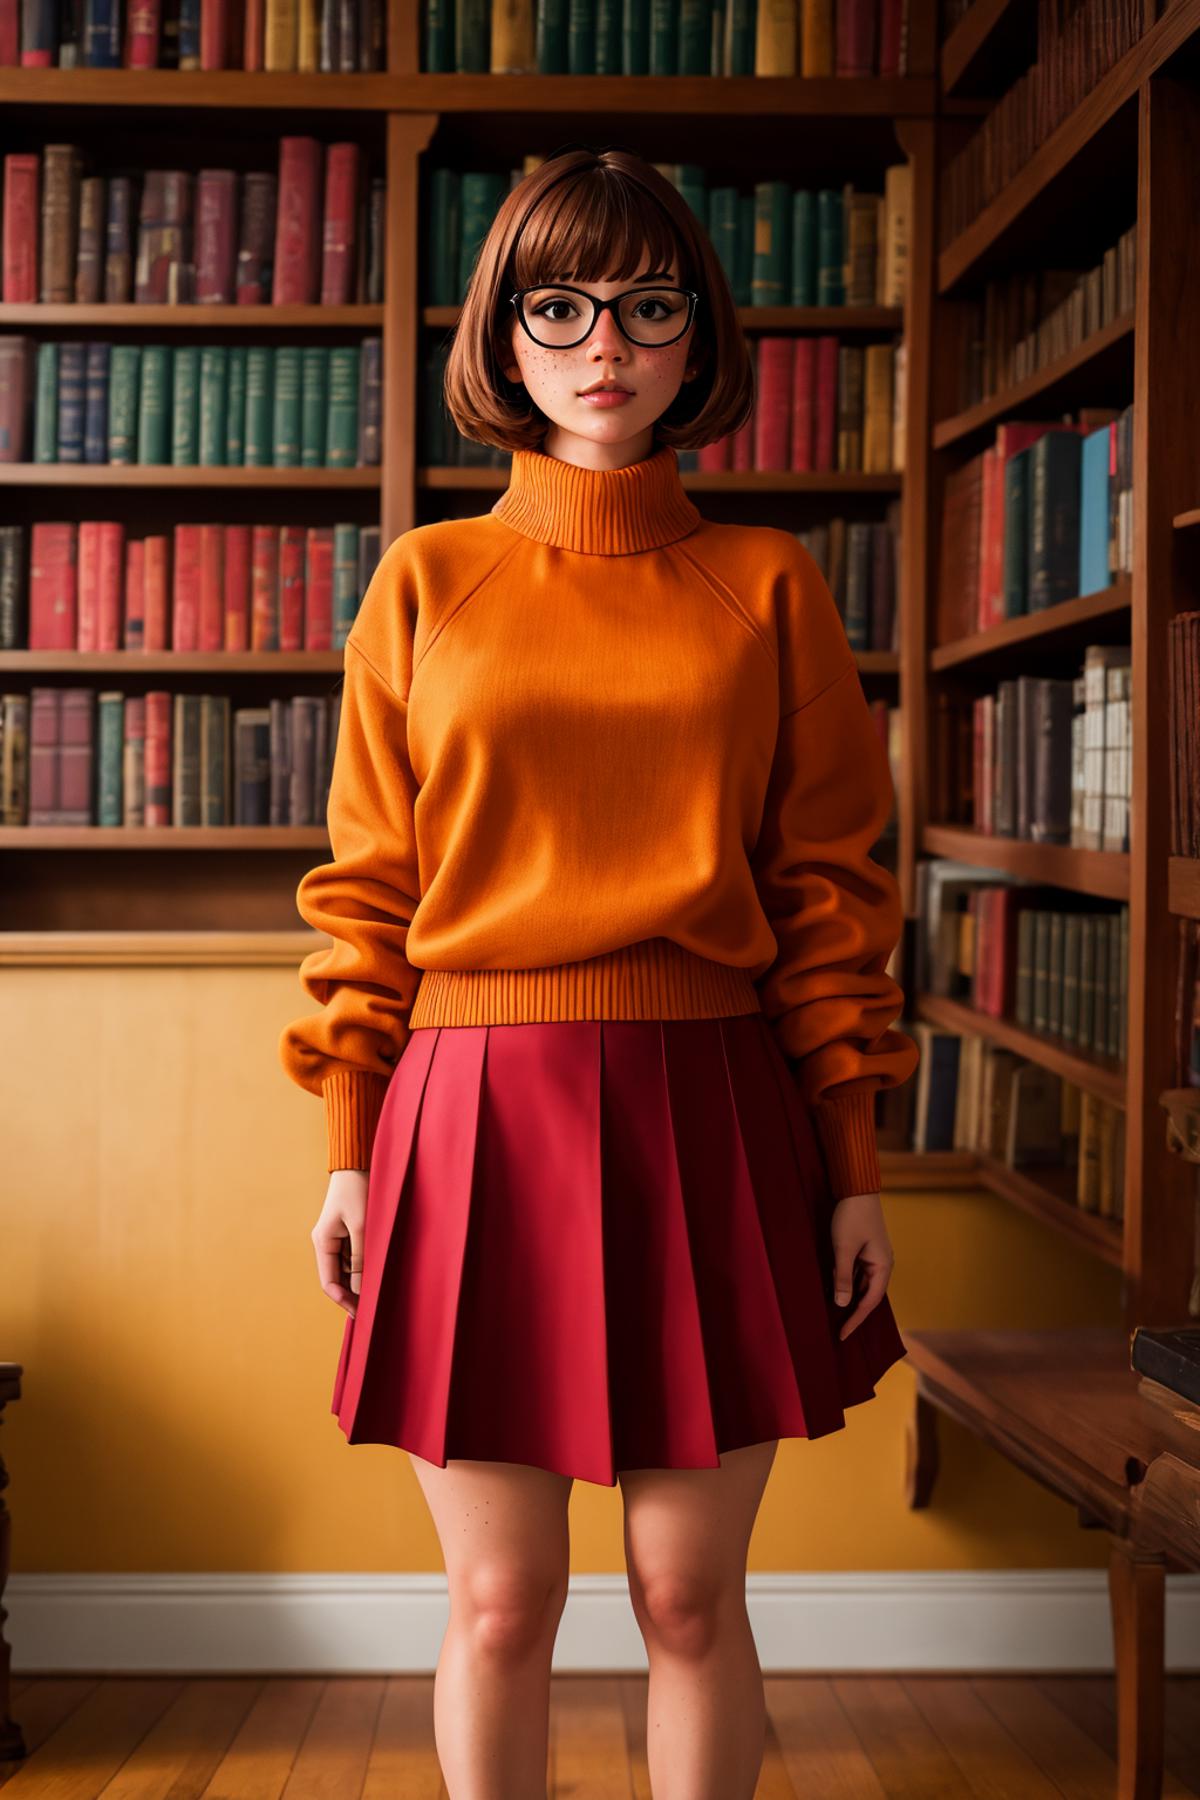 Velma Dinkley [Cosplay-Fanart] image by 070809